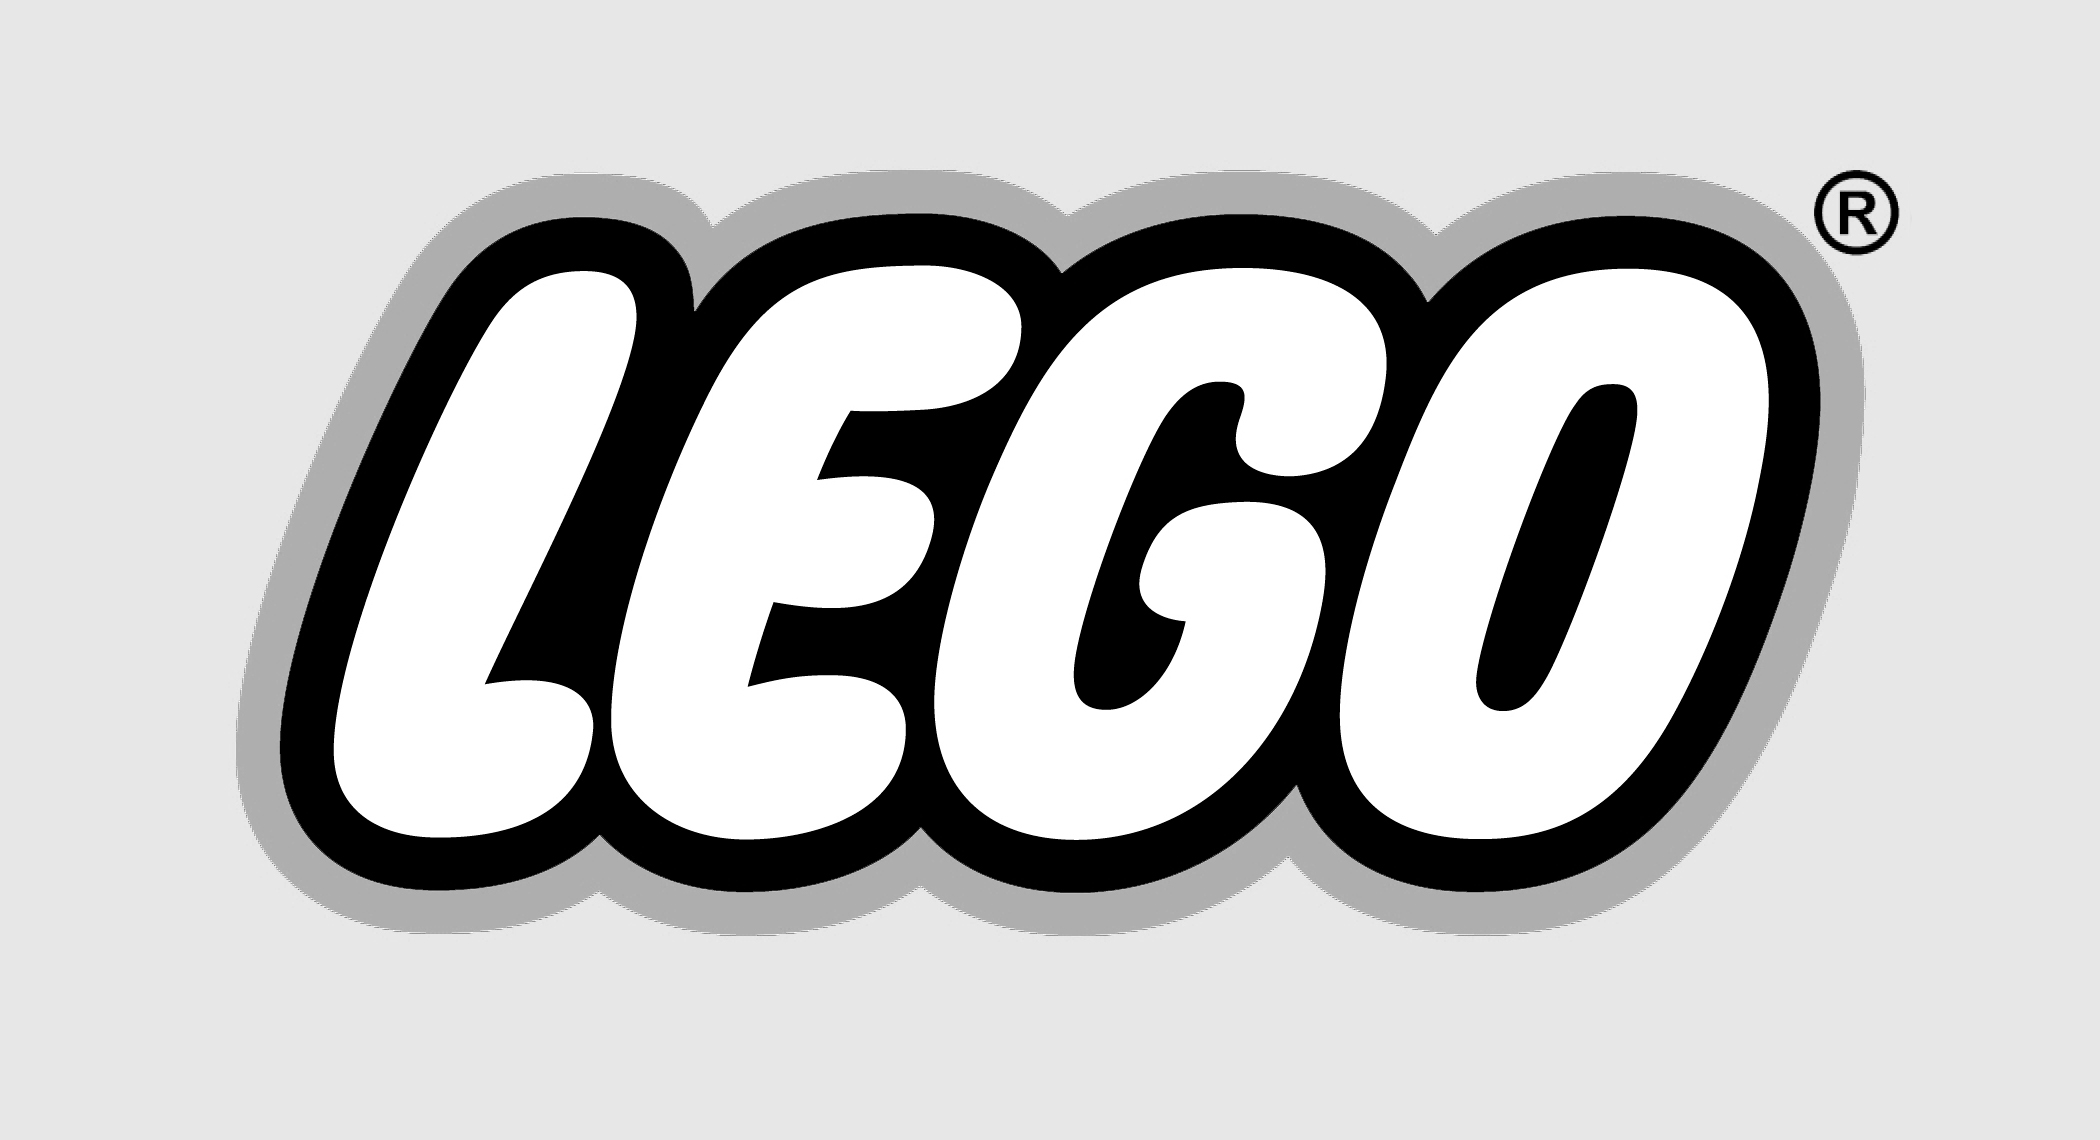 логотип лего картинки